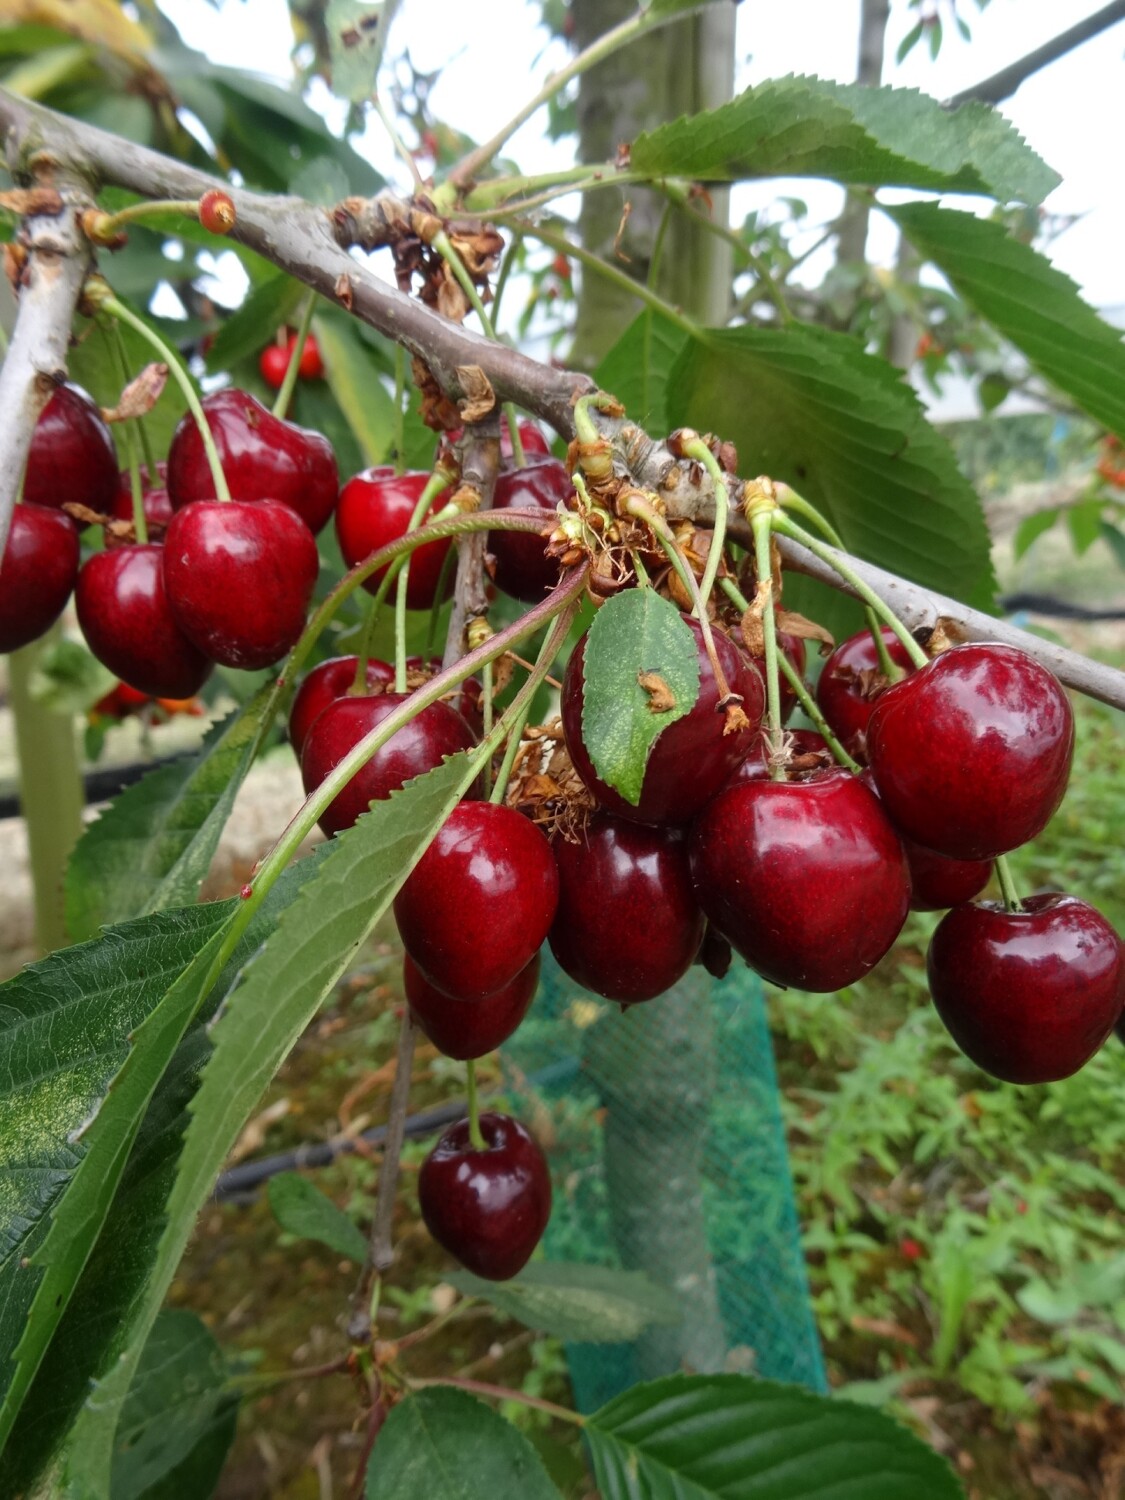 Kordia cherries on a branch